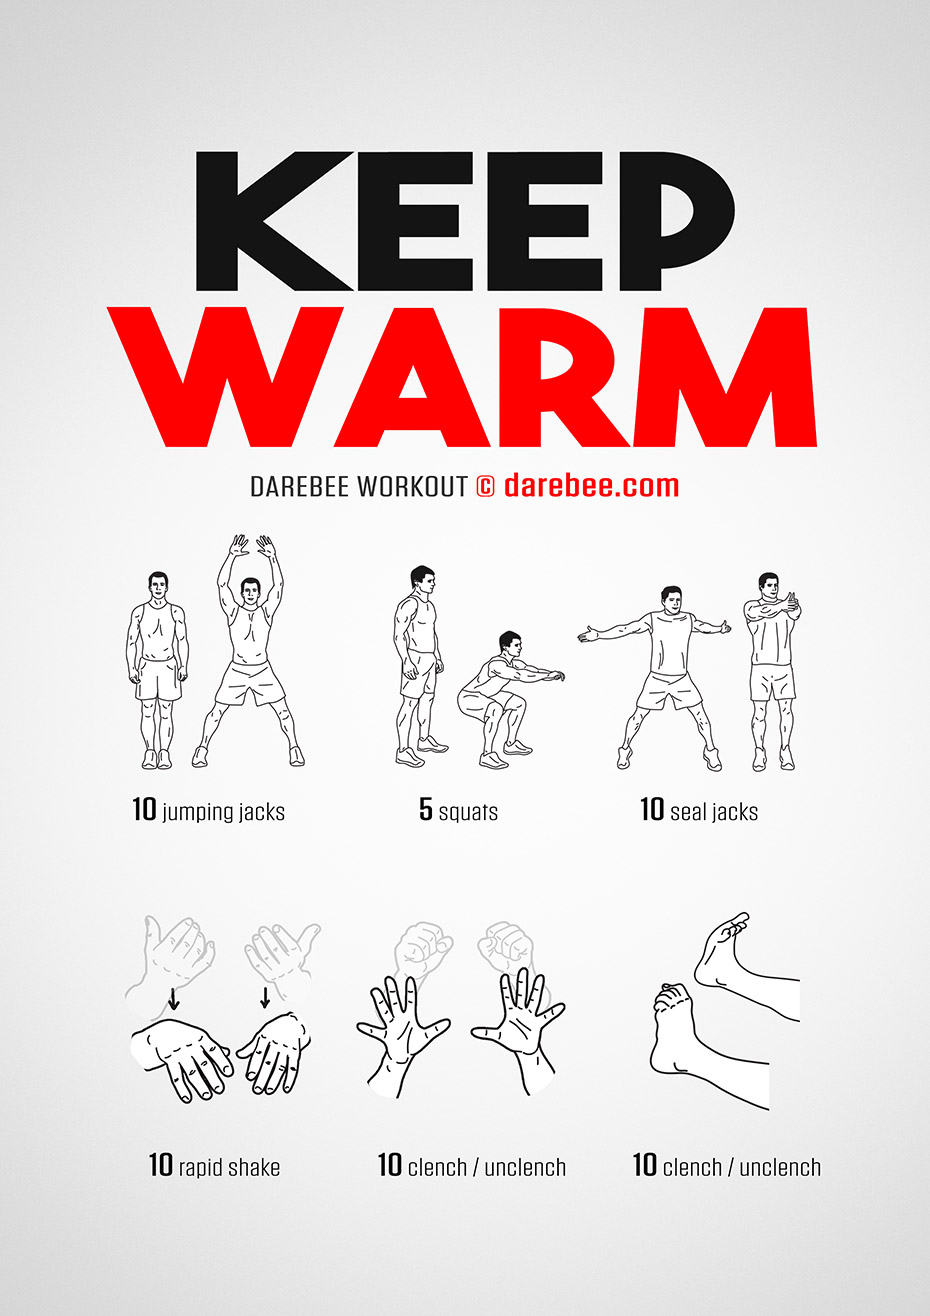 https://darebee.com/images/workouts/keep-warm-workout.jpg